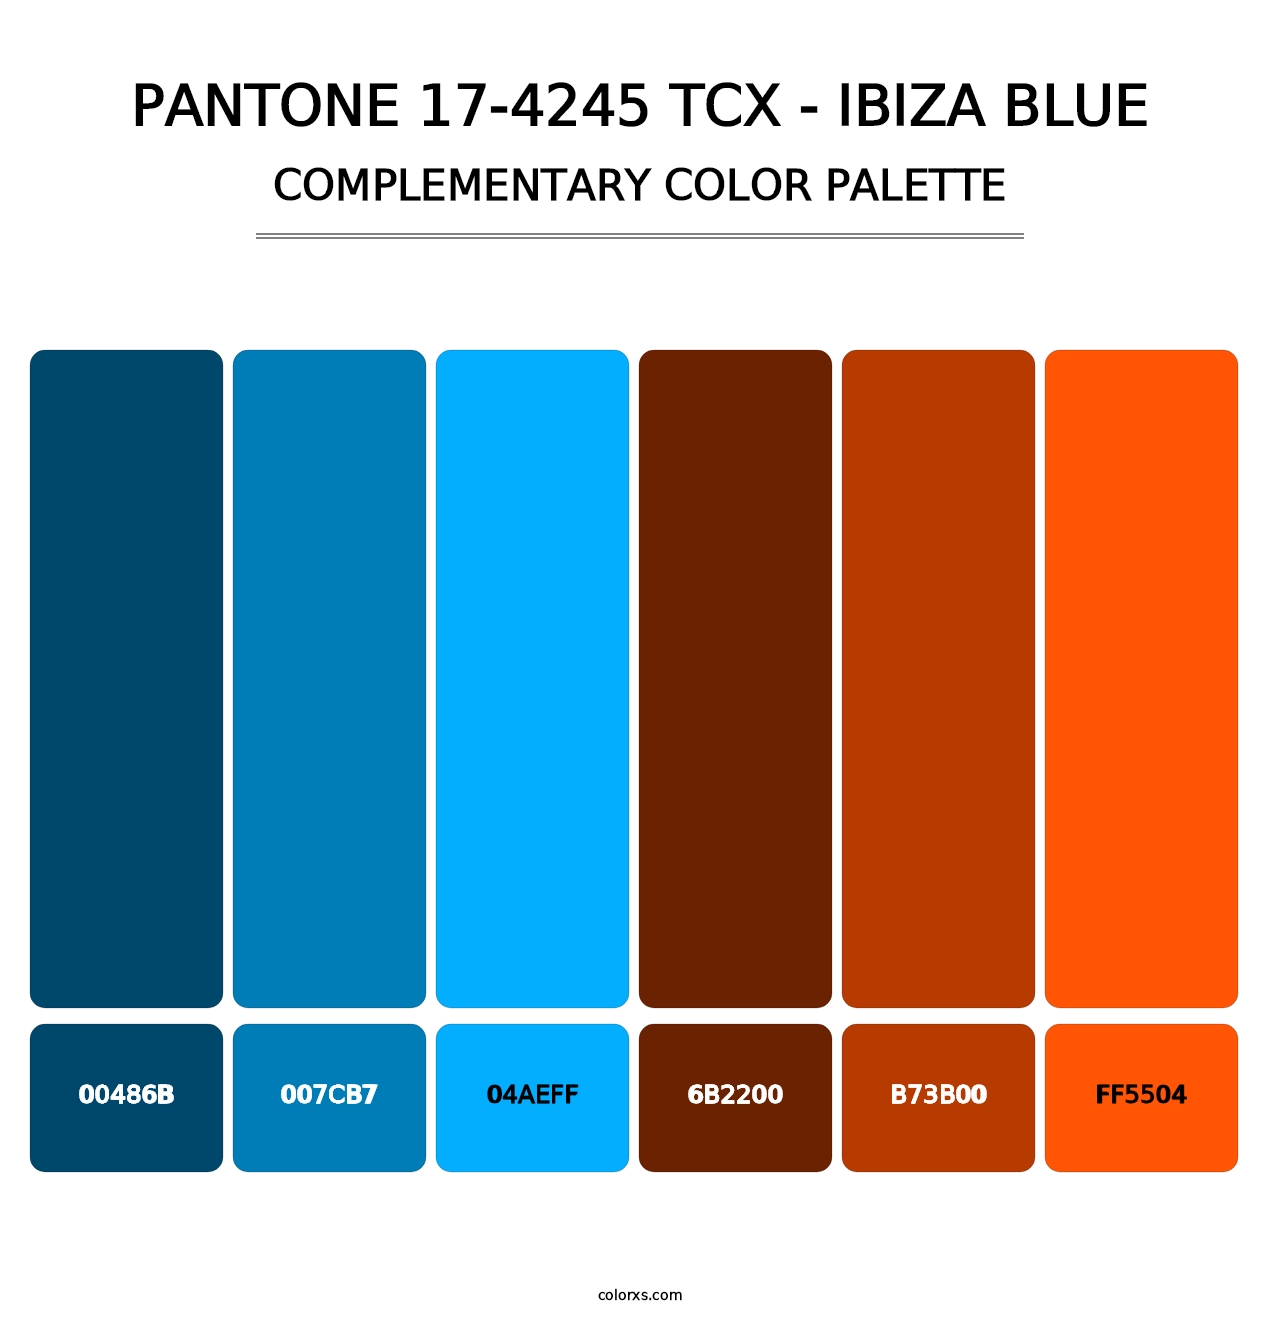 PANTONE 17-4245 TCX - Ibiza Blue - Complementary Color Palette